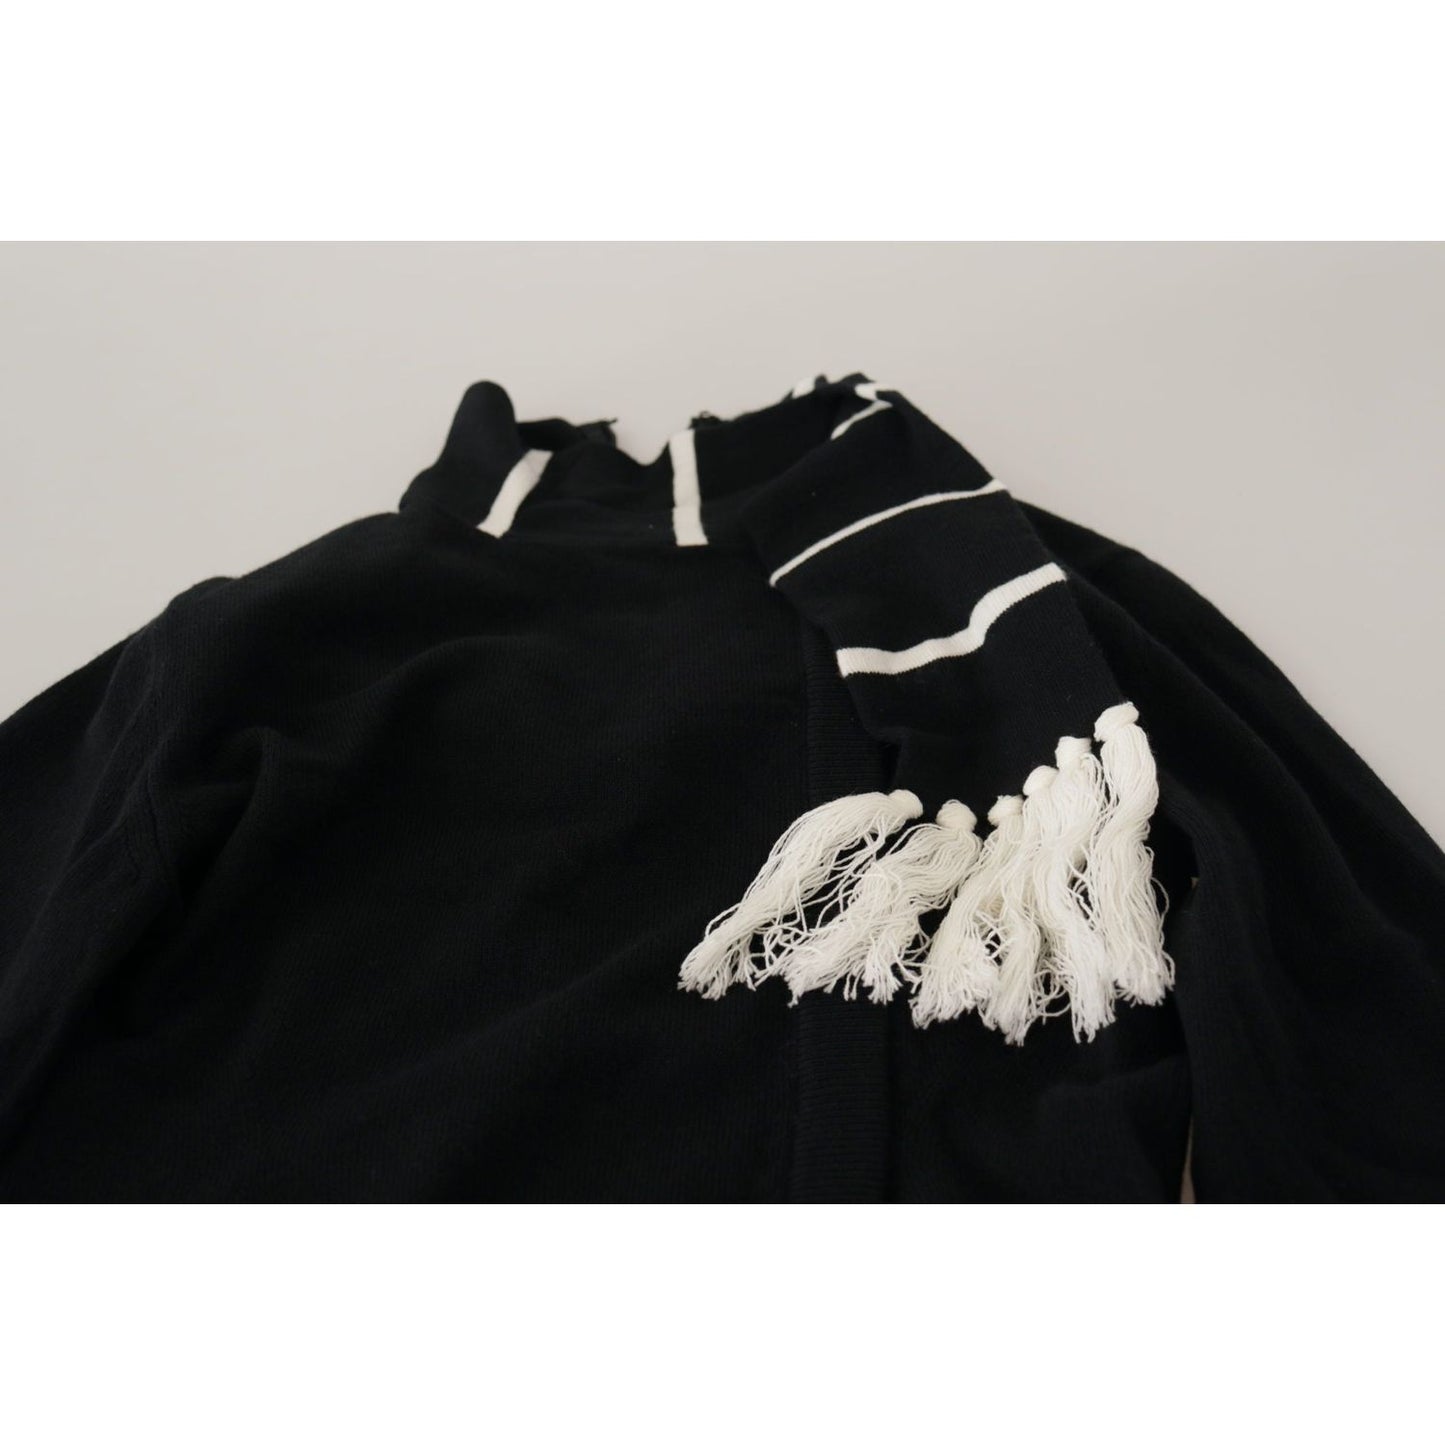 Dolce & GabbanaElegant Black Cashmere Turtleneck SweaterMcRichard Designer Brands£579.00